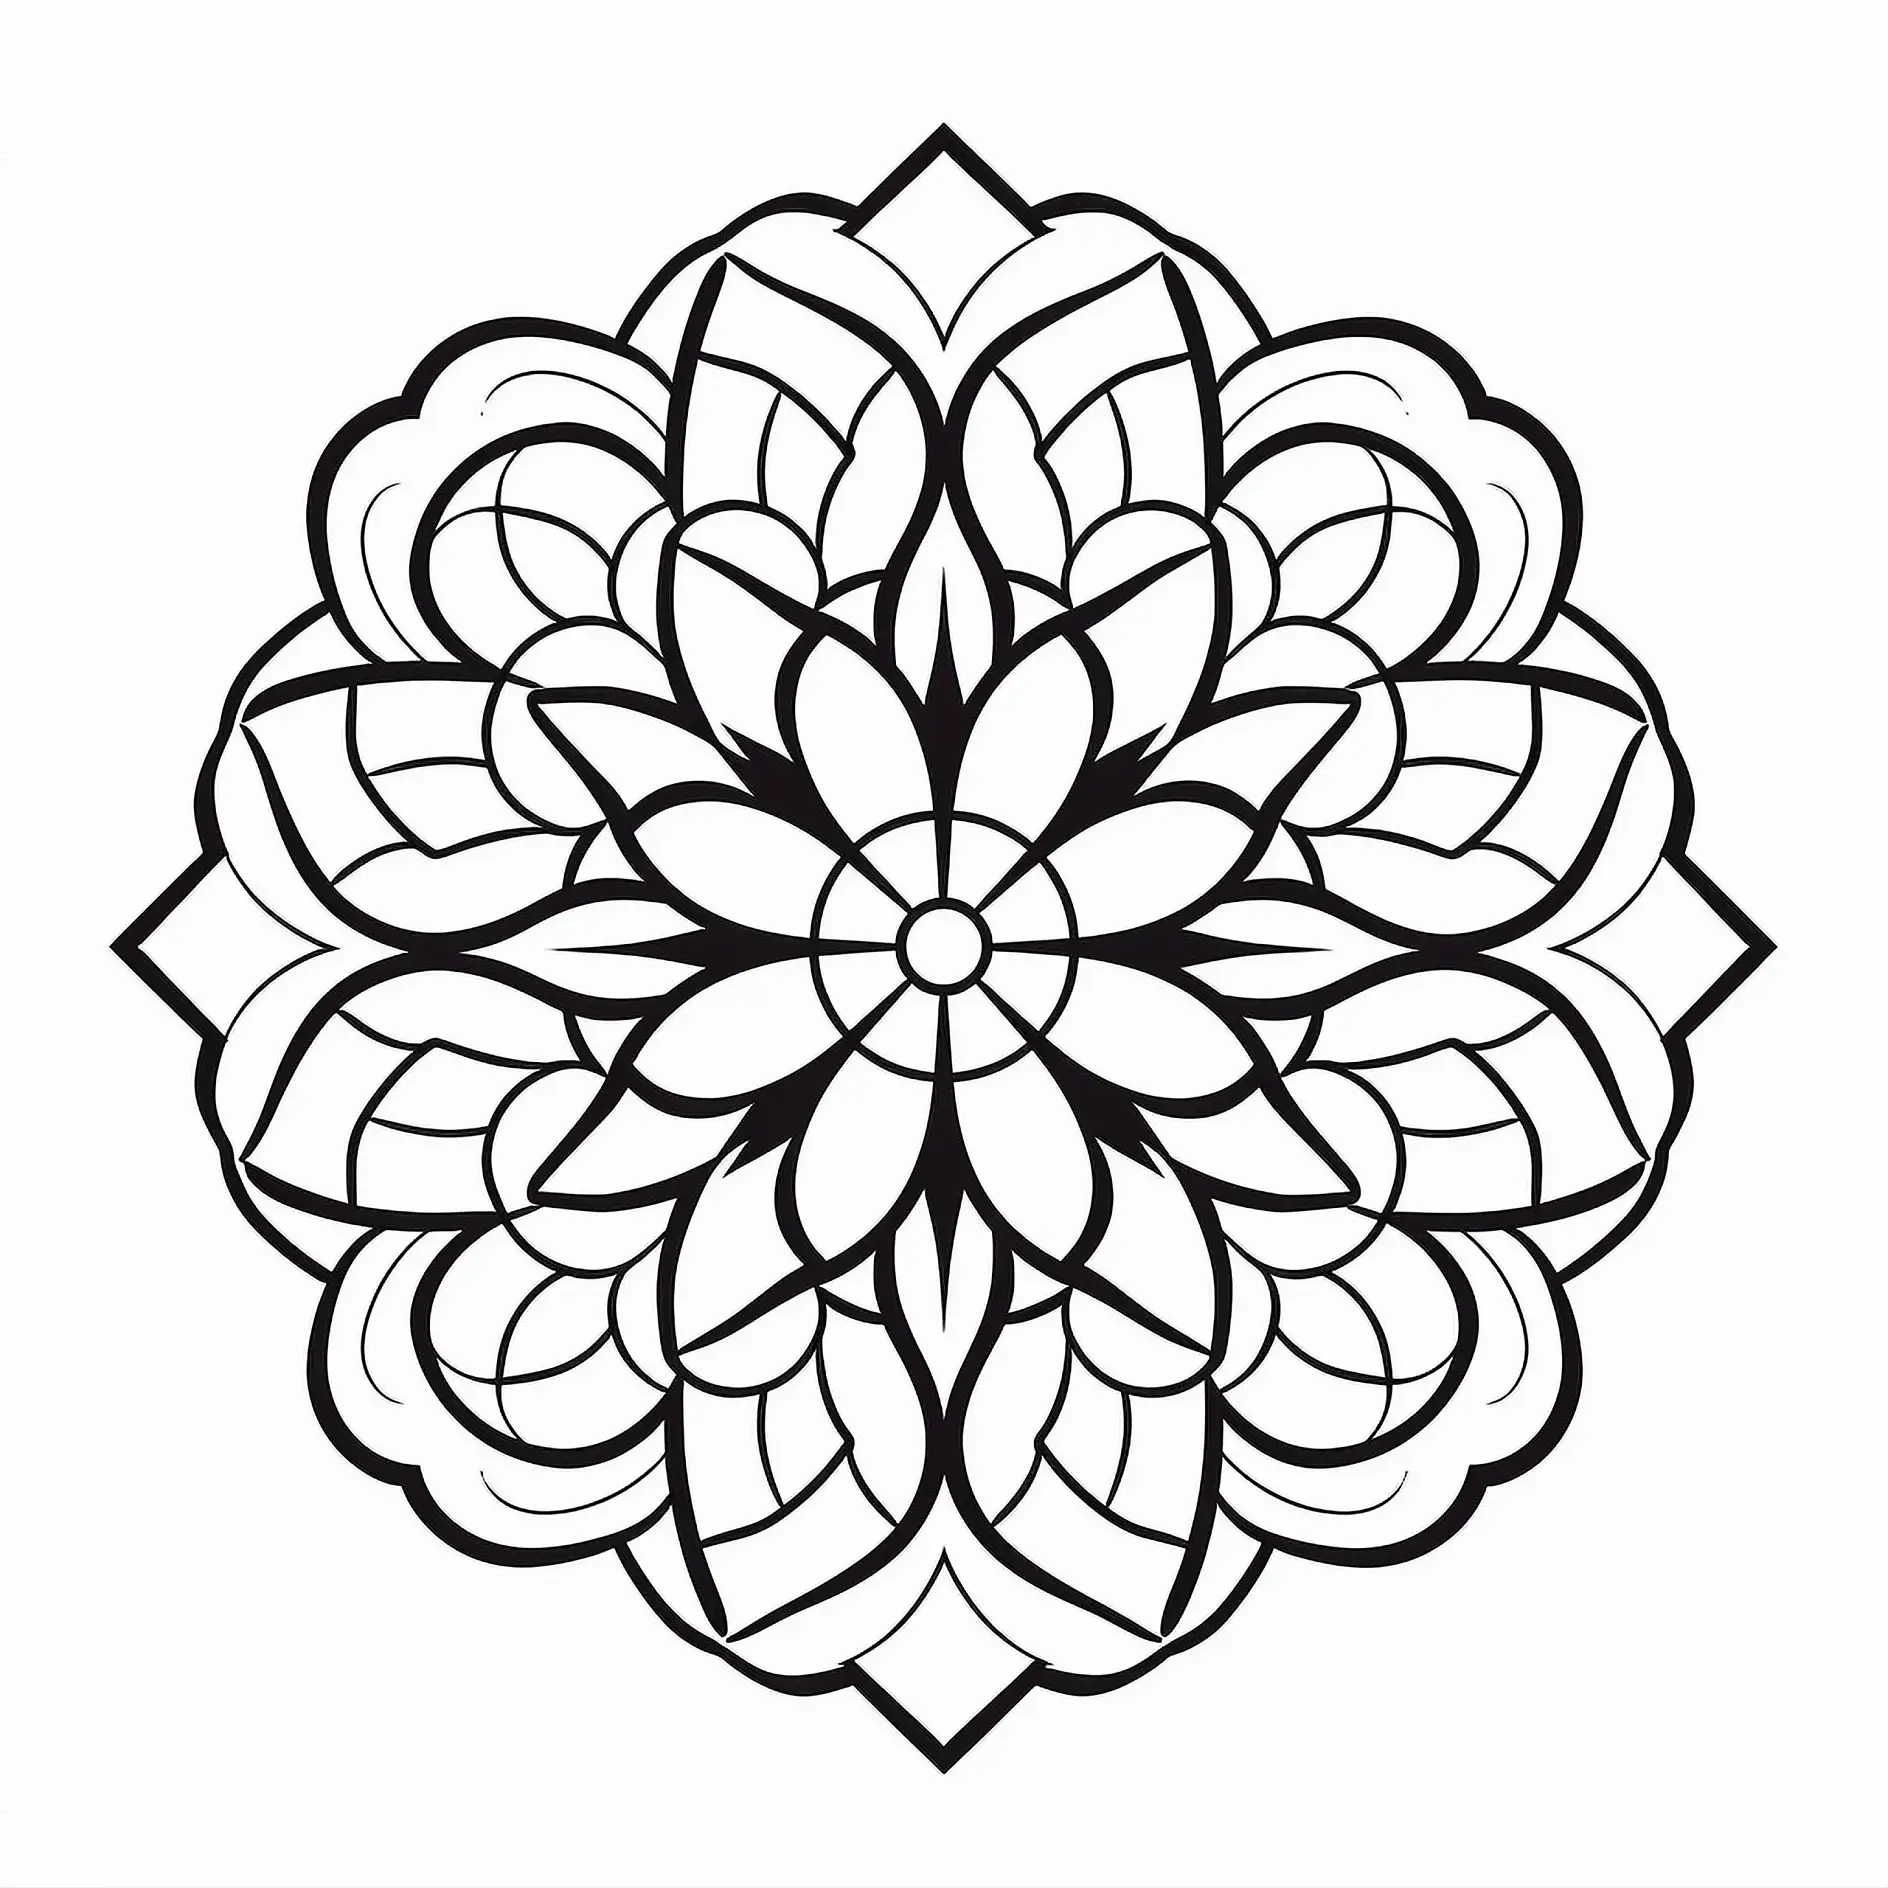 Ausmalbild Mandala mit symmetrischem Blütenmuster